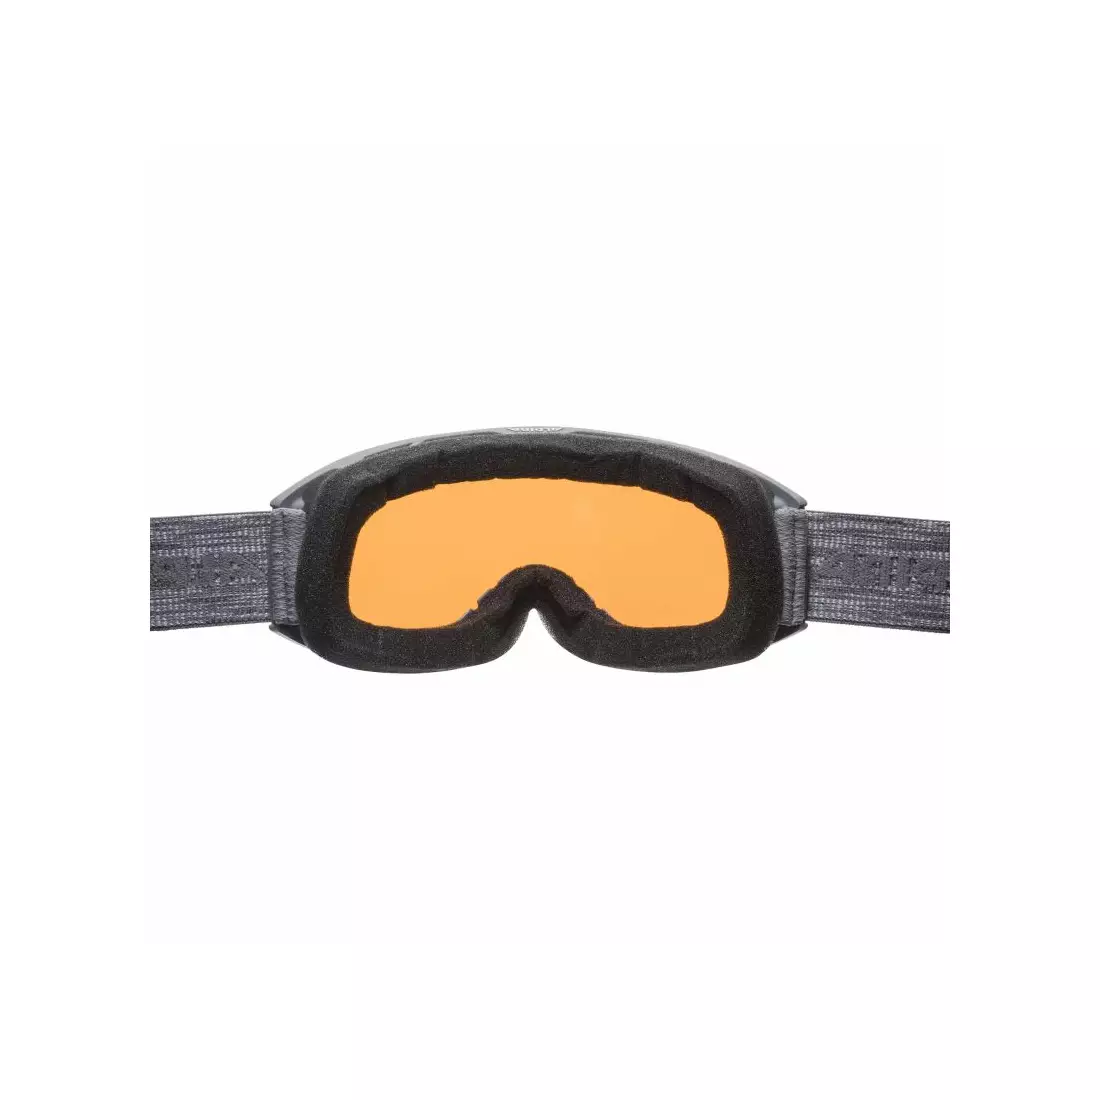 ALPINA Ski-/Snowboardbrille M40 NAKISKA DH grau A7281123